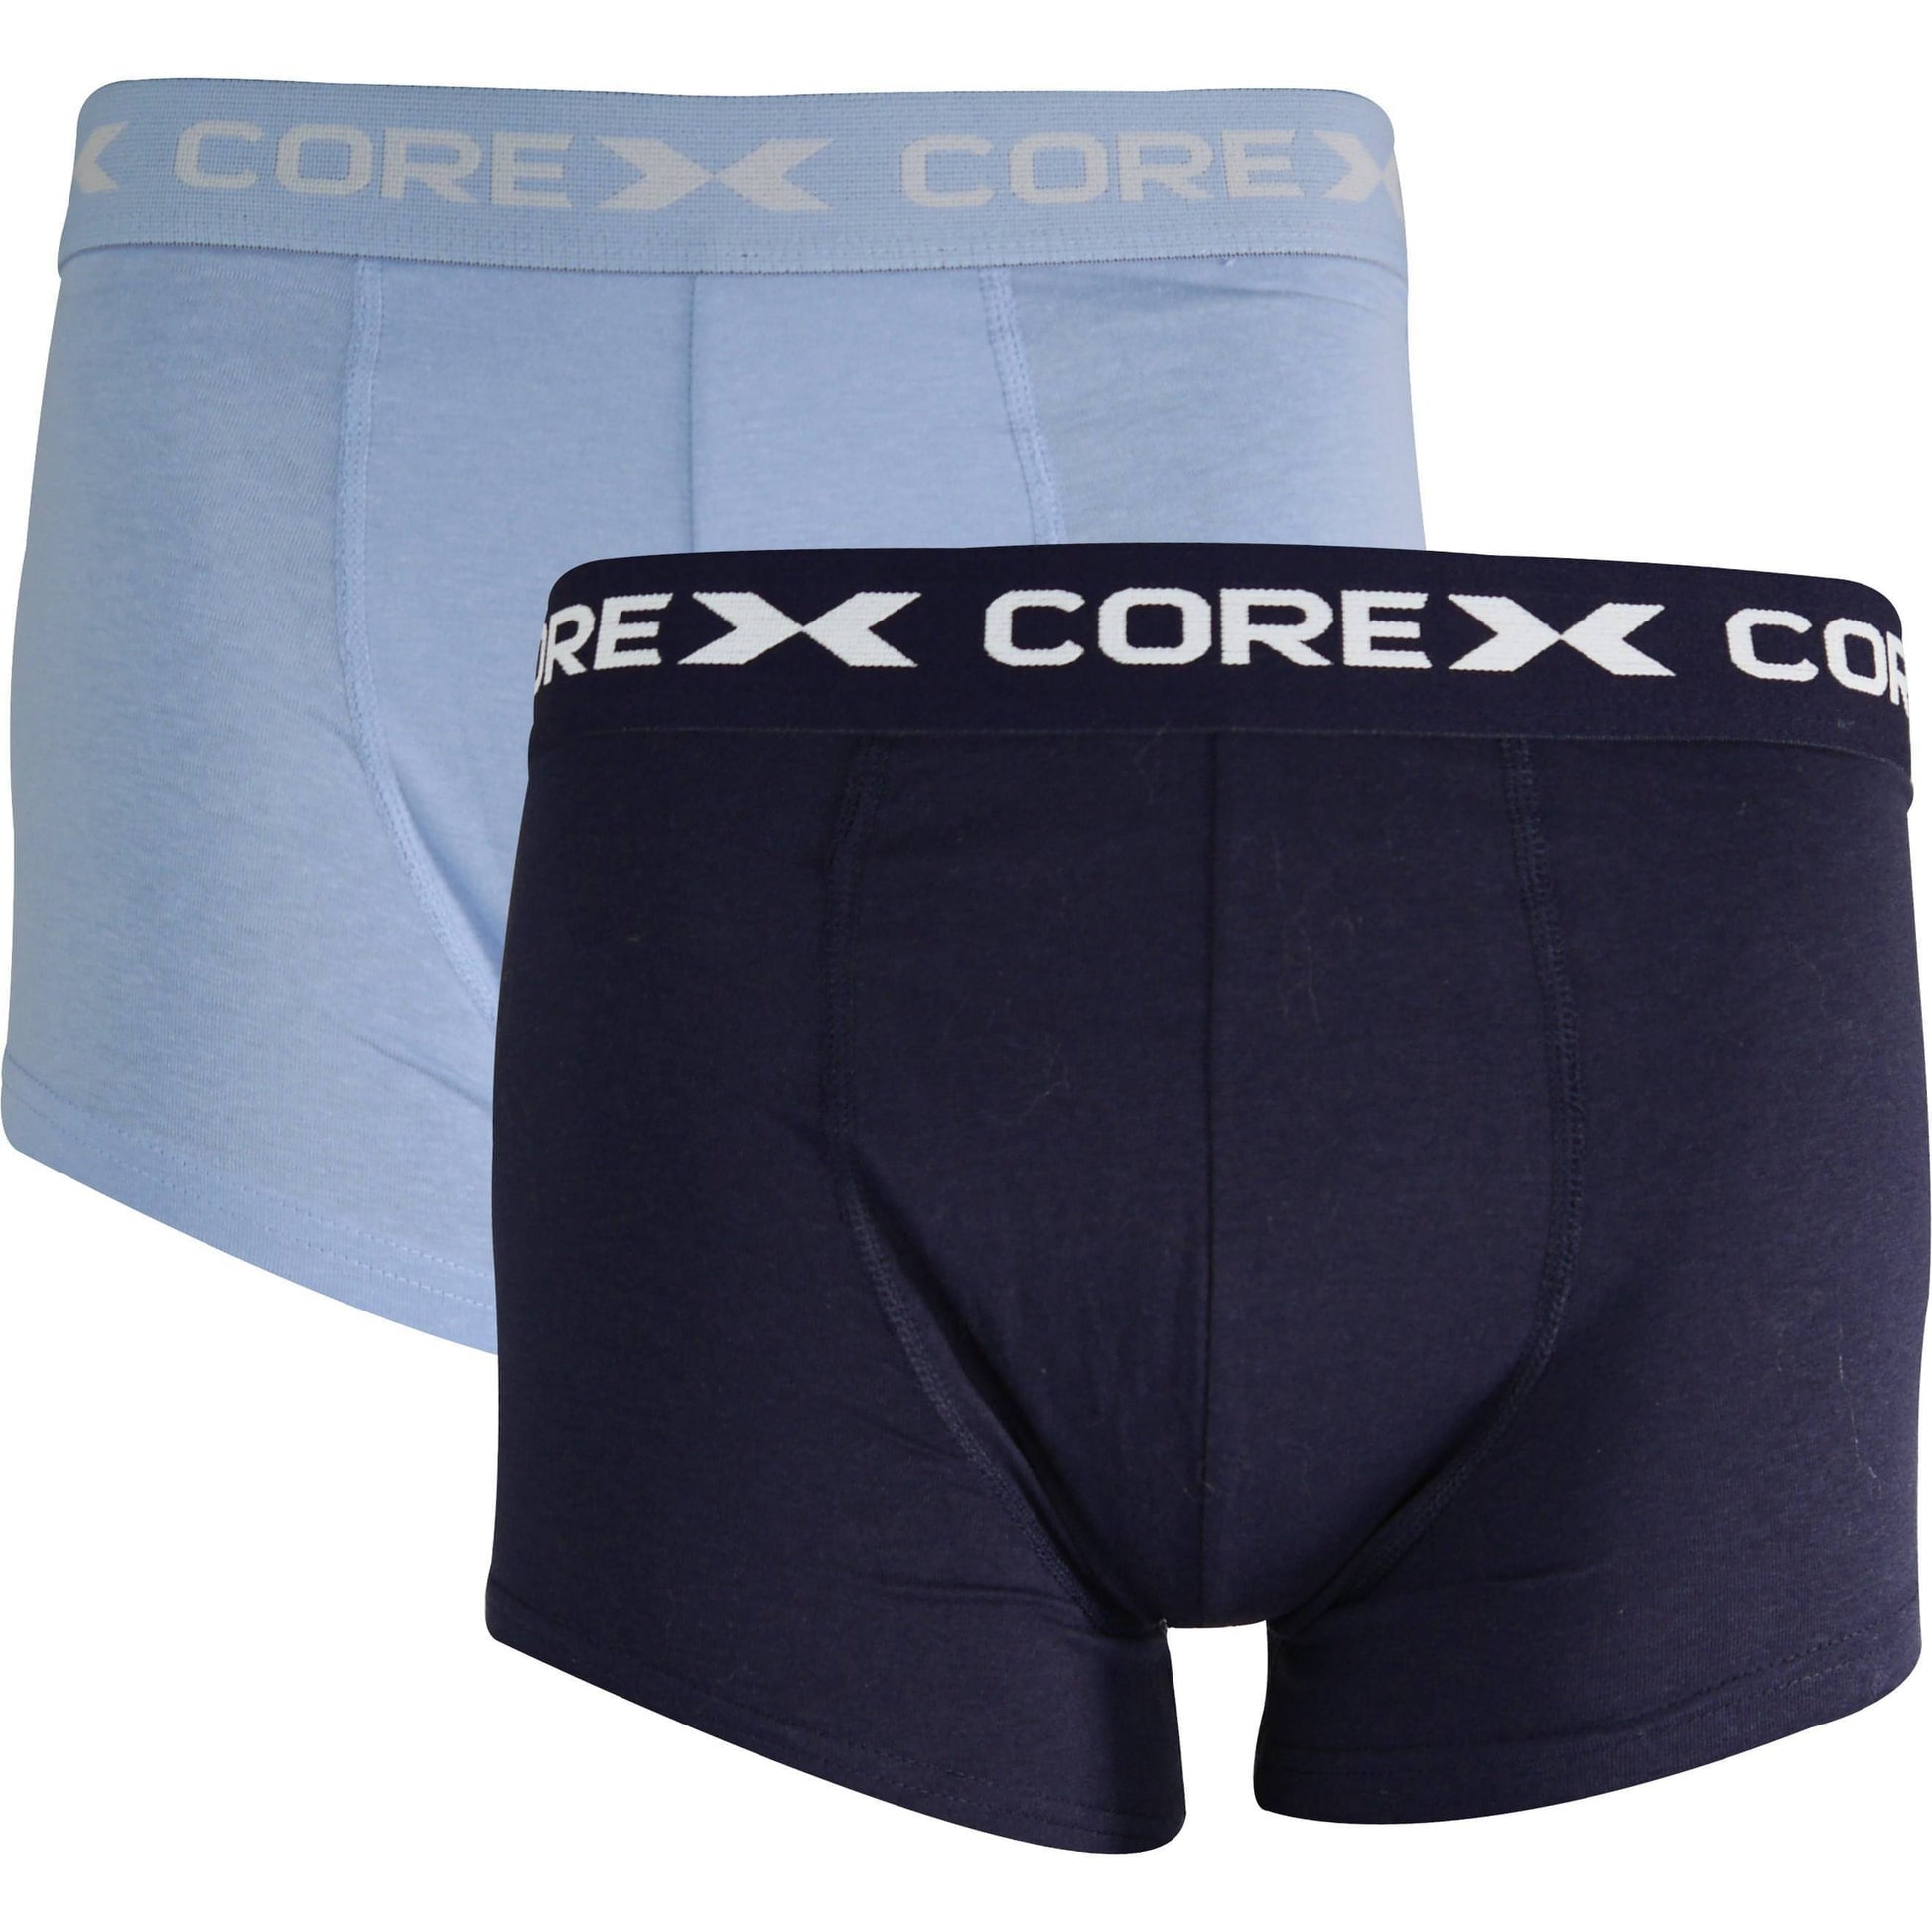 Corex Fitness Classic Pack Boxers 1P204931Wm Navyblue